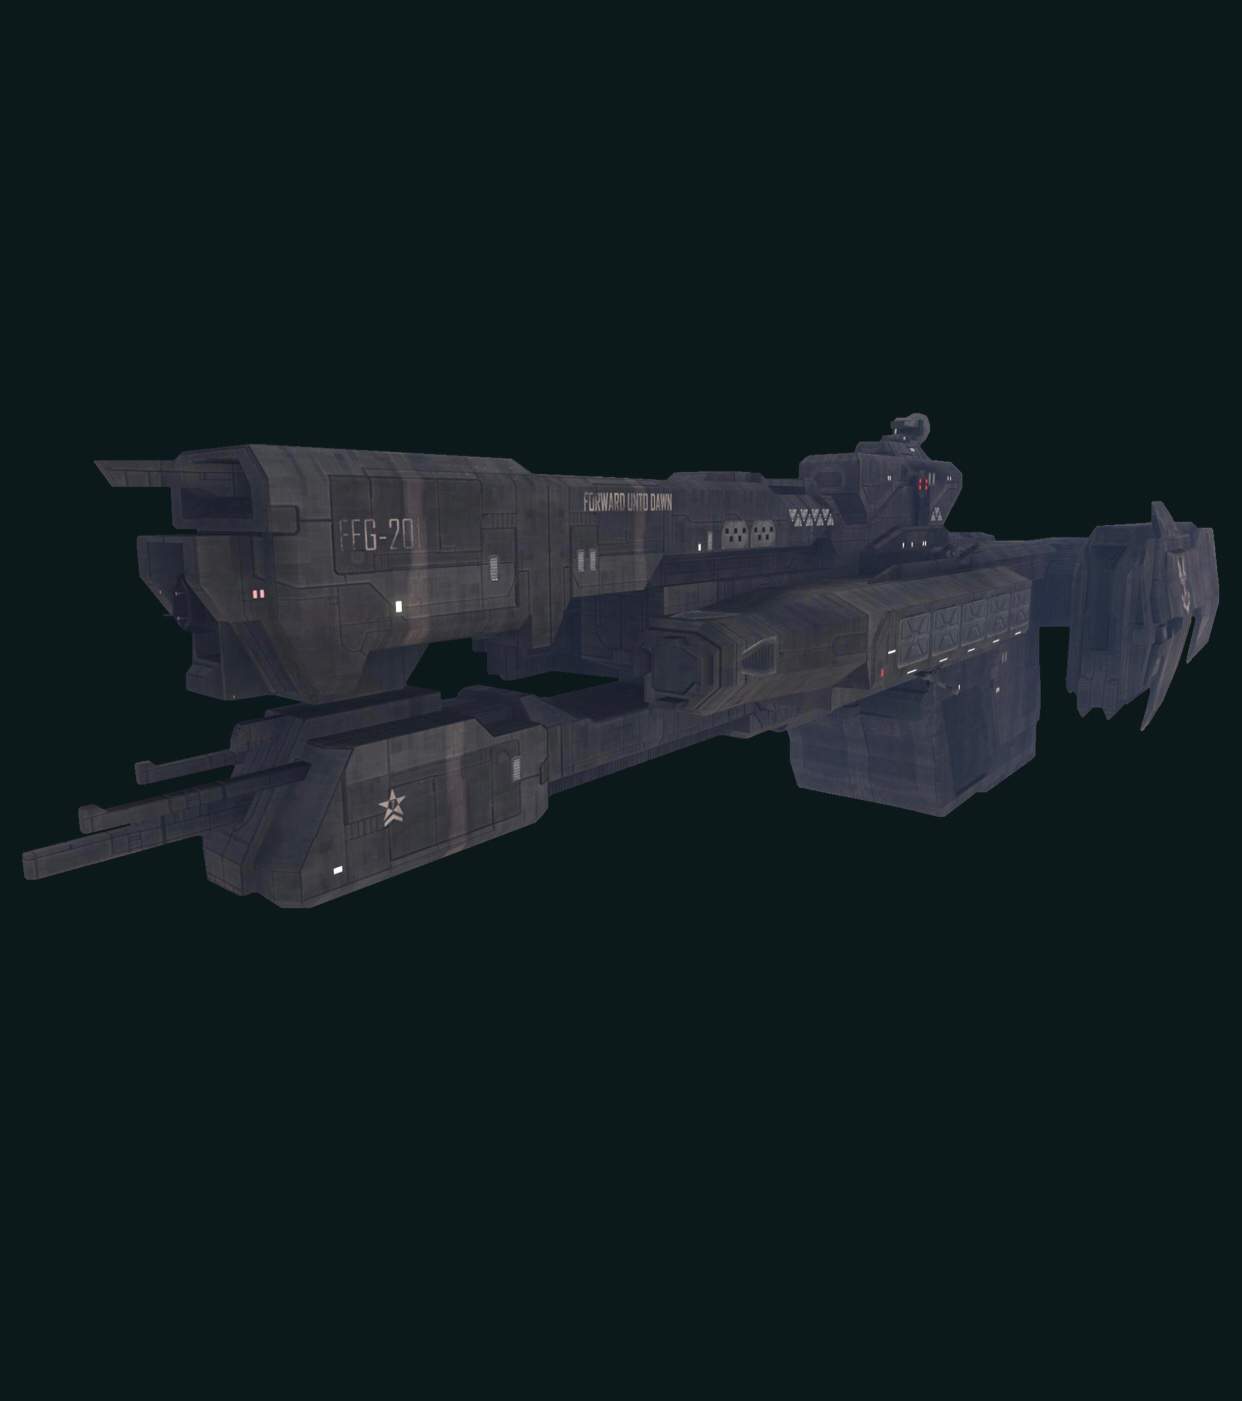 Charon-class light frigate | Wiki | Star Wars Clone Wars RP Amino